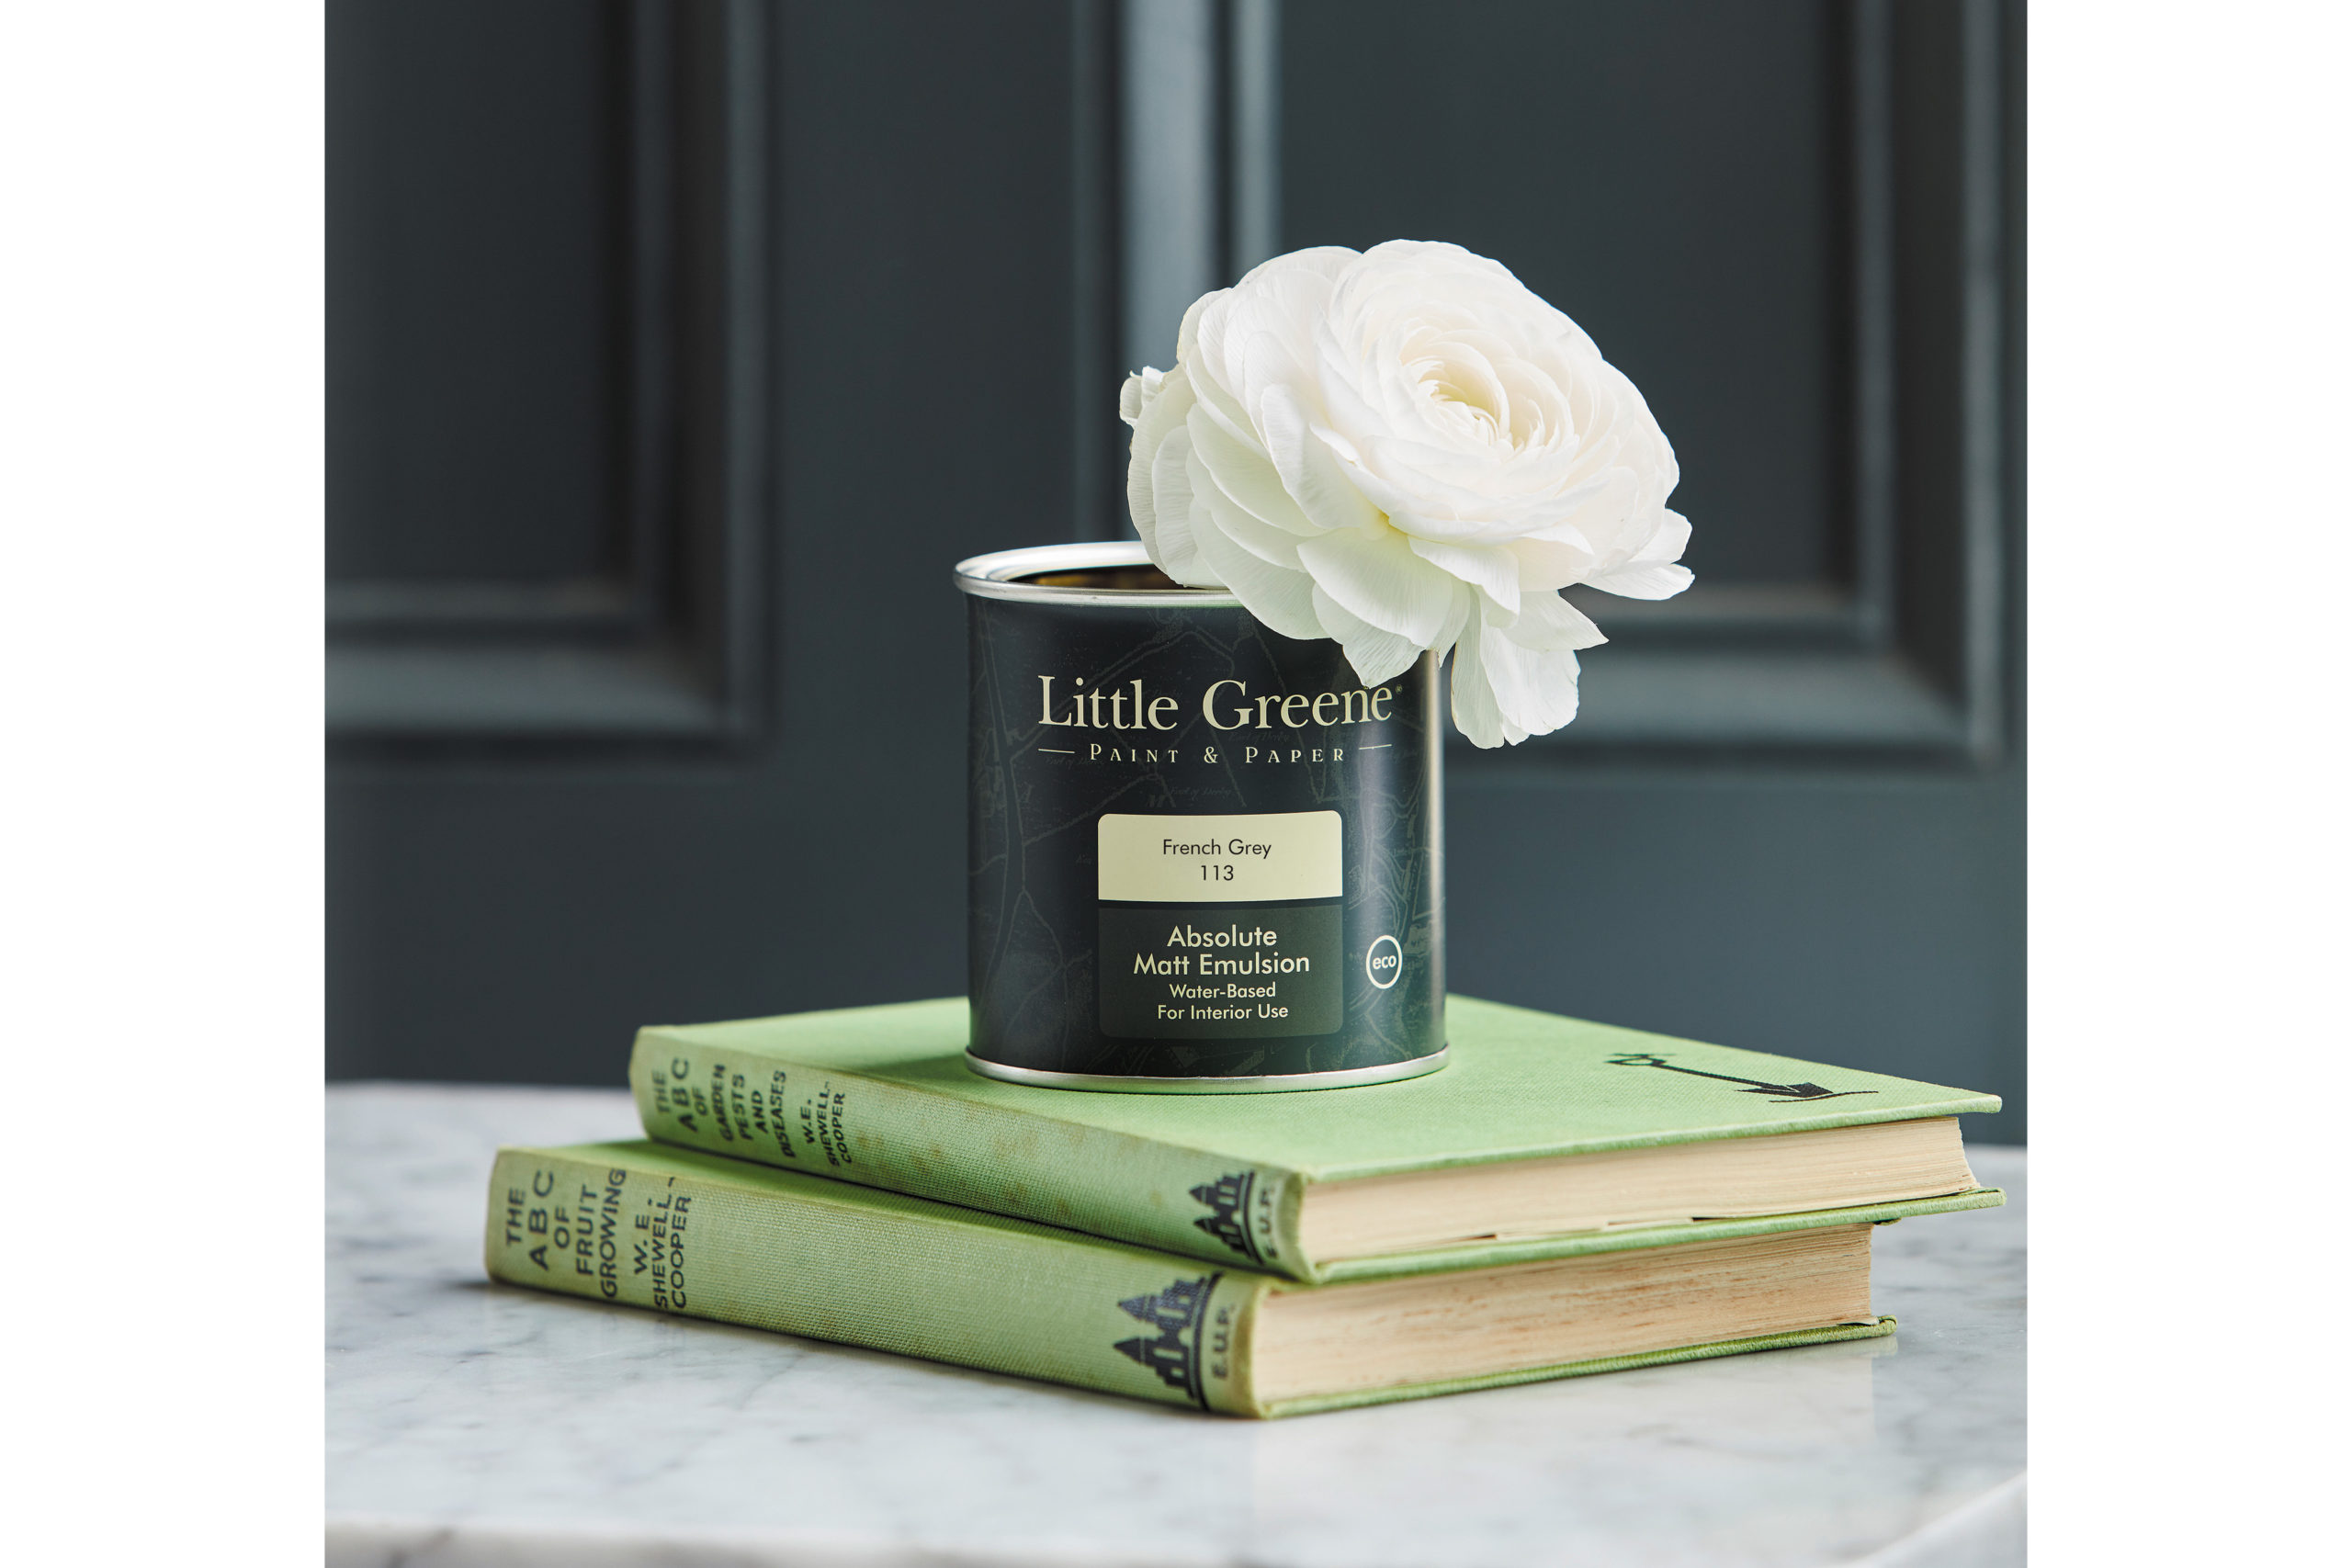 Little Greene paint tin, white peony, green books